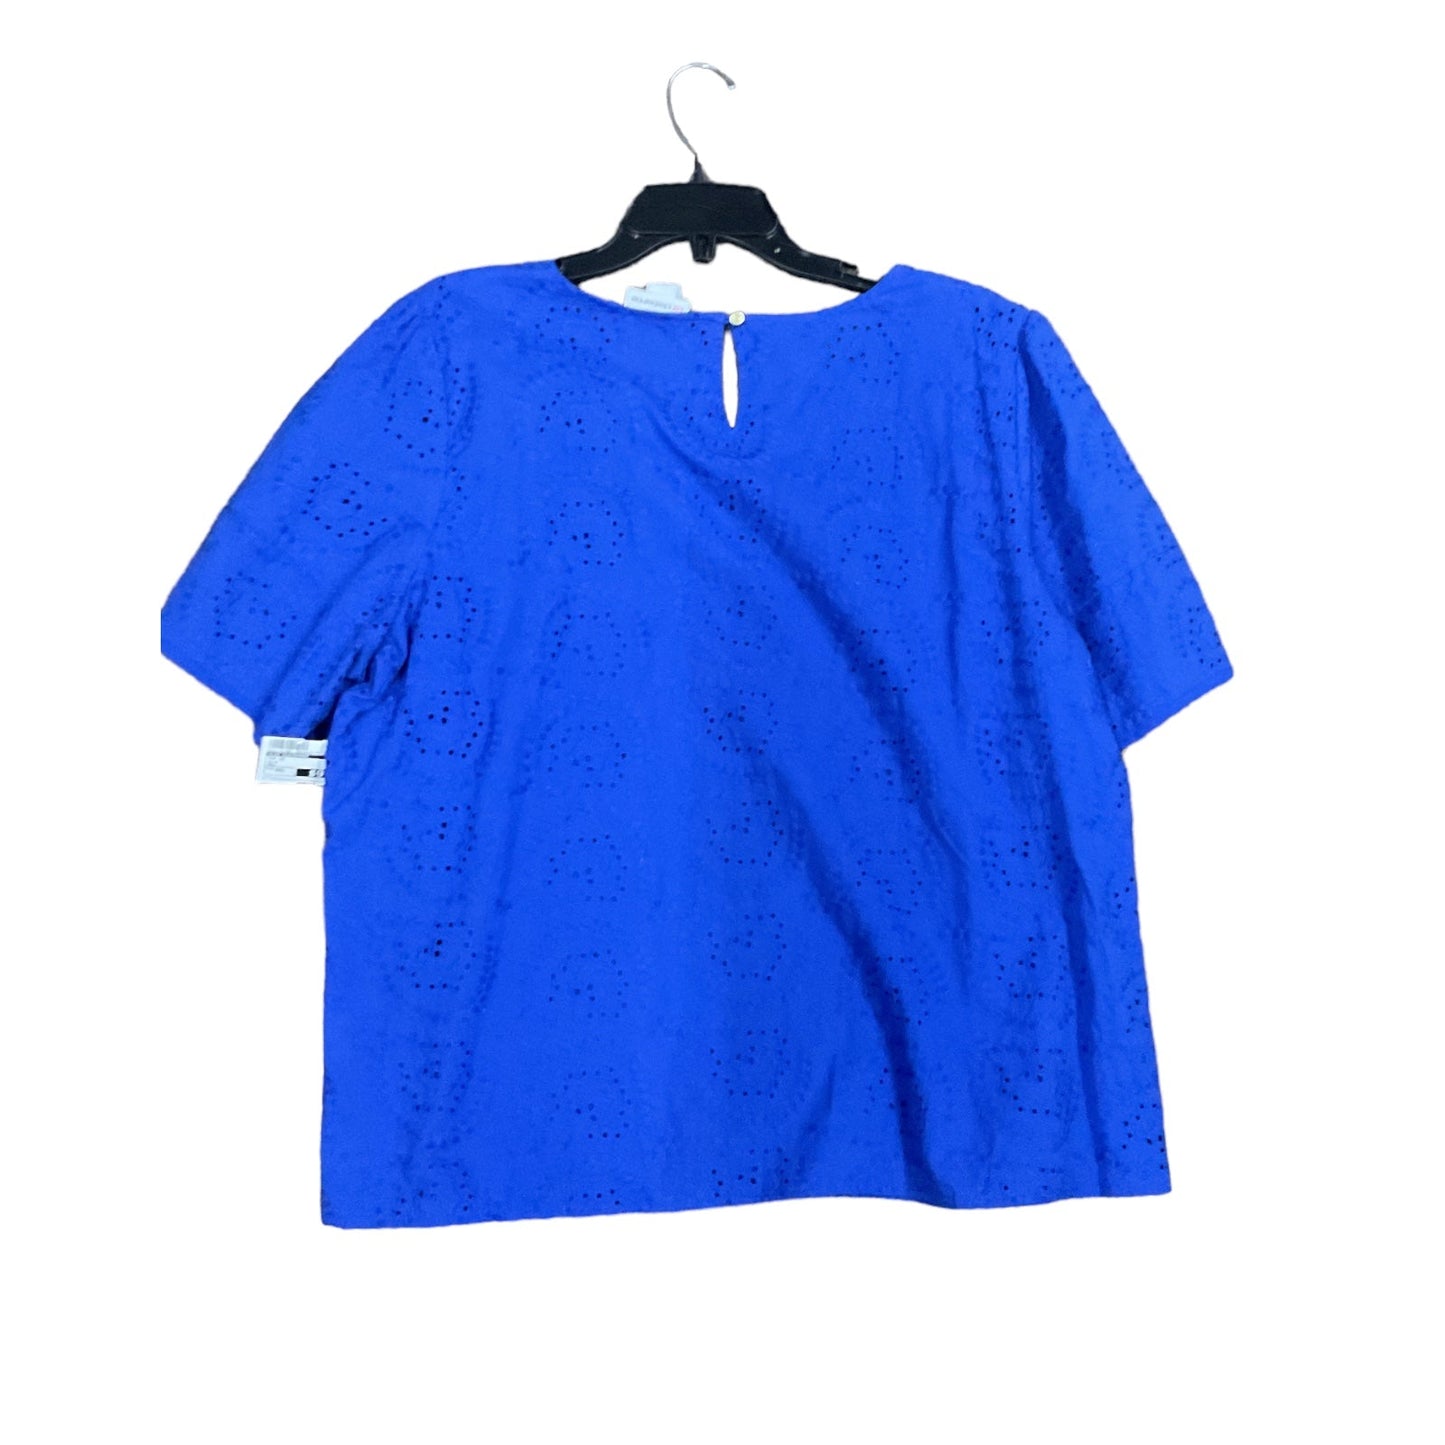 Blue Top Short Sleeve Liz Claiborne, Size Xxl